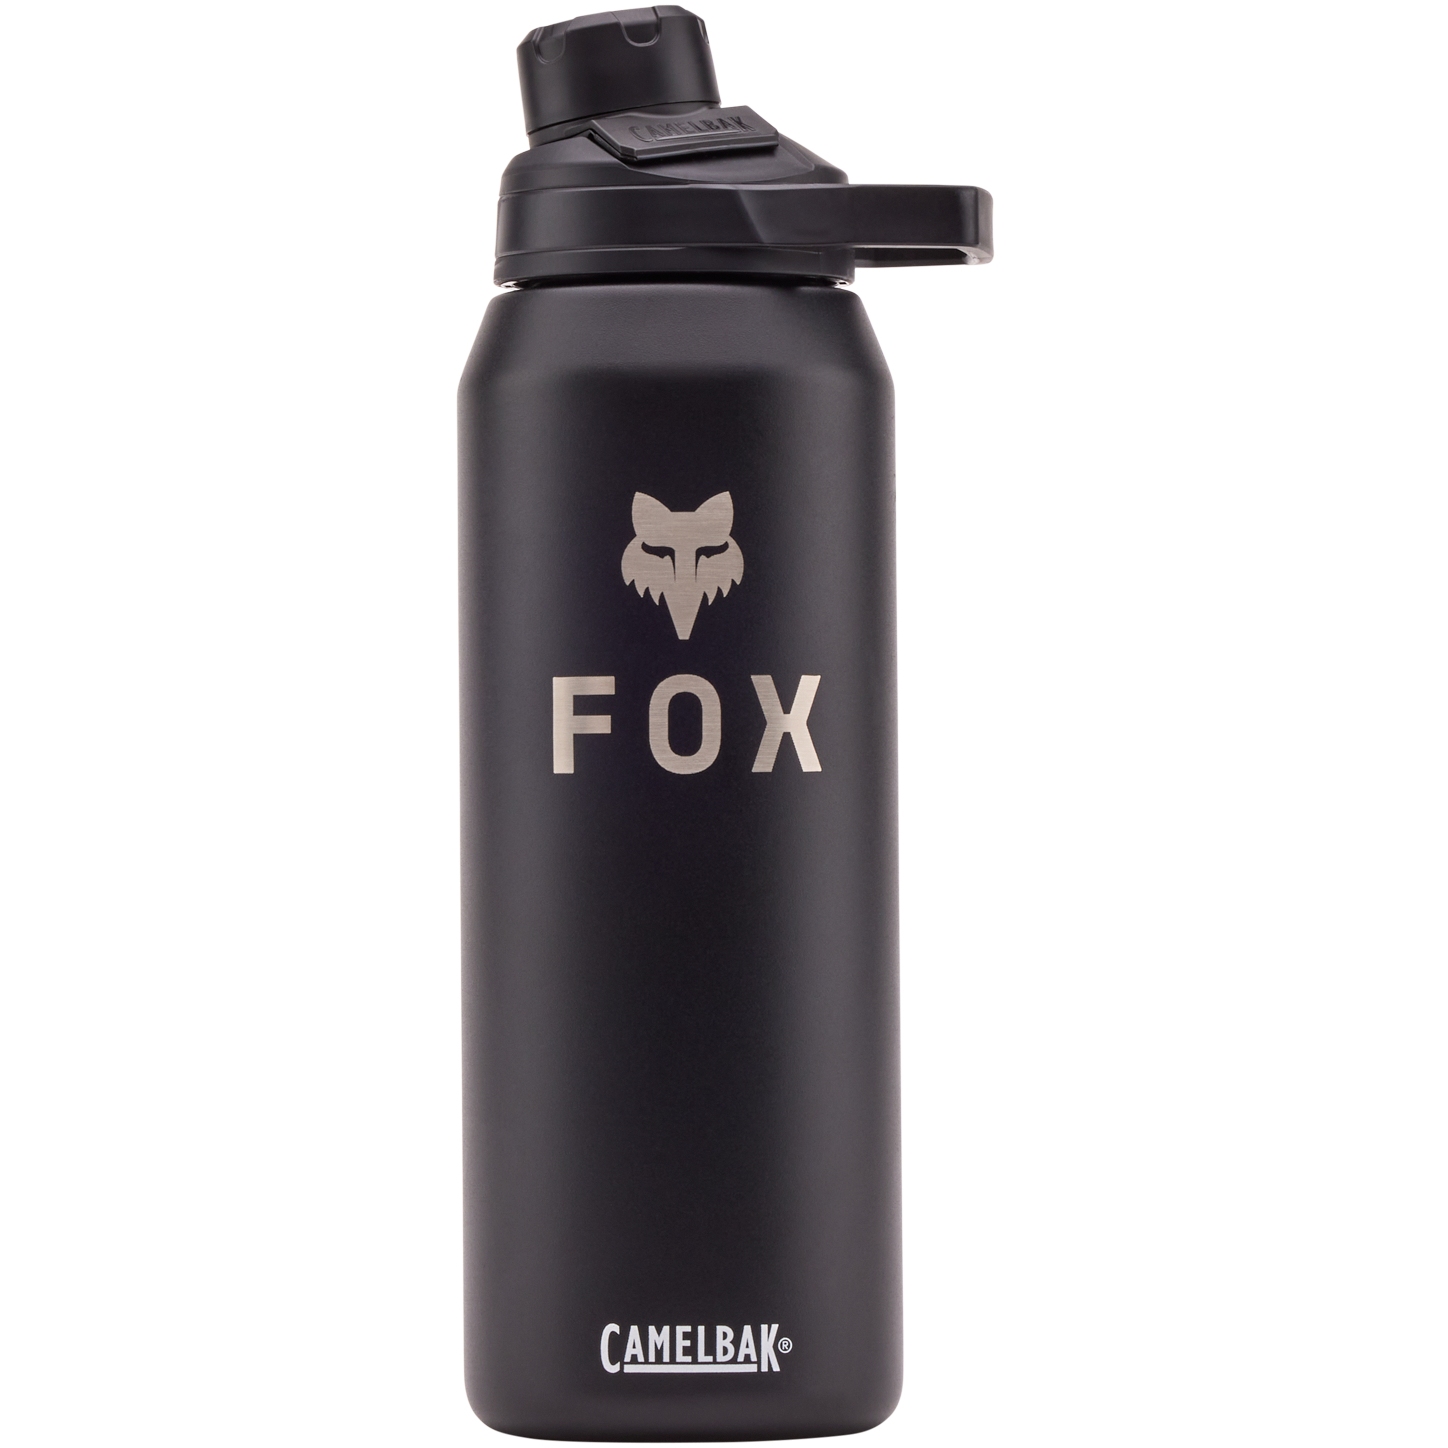 Productfoto van FOX X Camelbak 950ml / 32 Oz Drinkfles - zwart